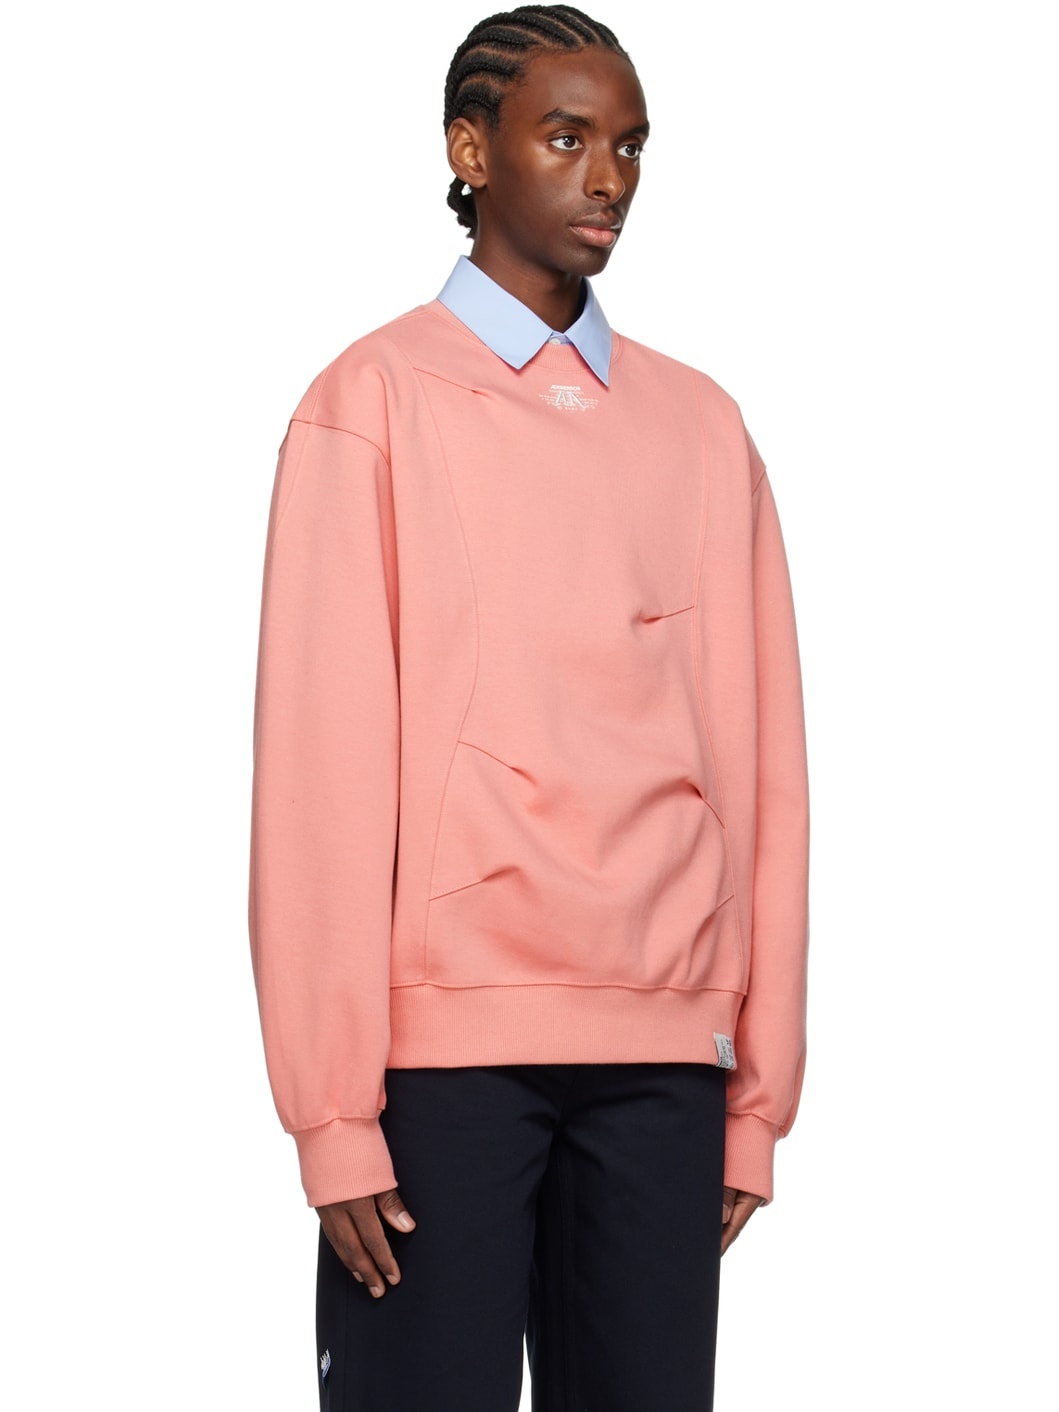 Pink Embroidered Sweatshirt - 2